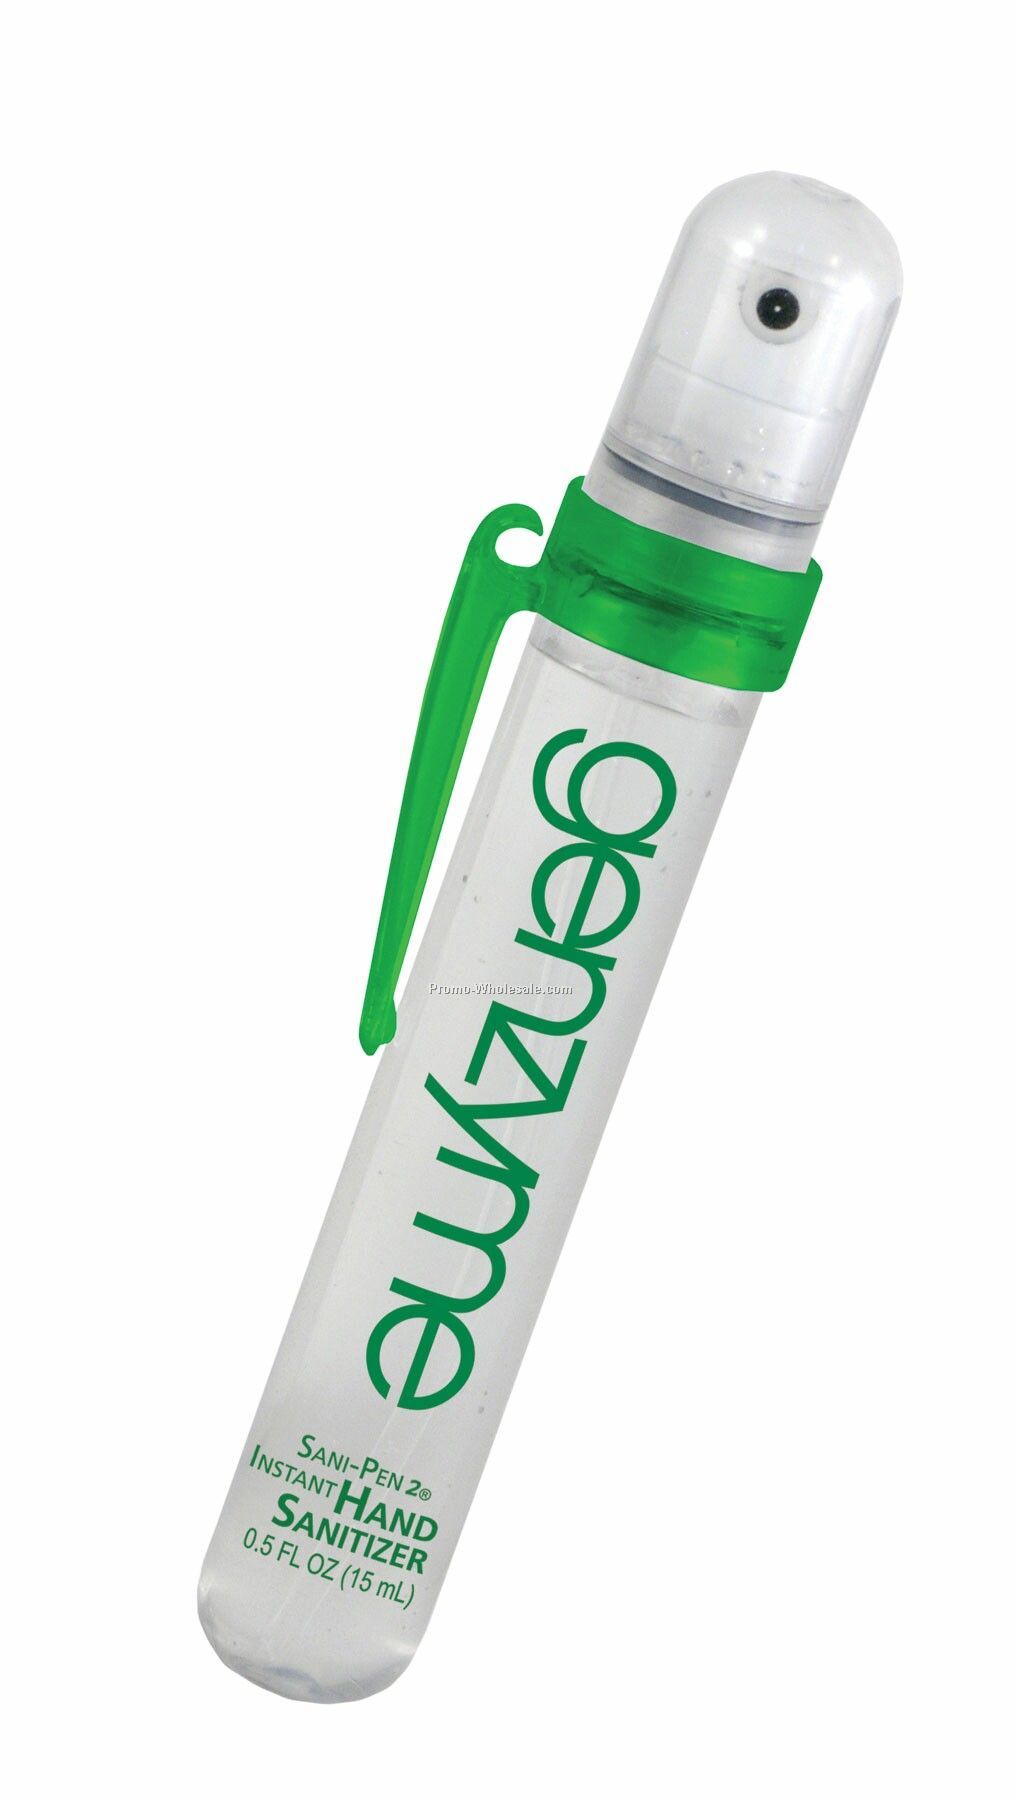 Sani-pen 2 Instant Hand Sanitizer Spray W/ Combo Clip